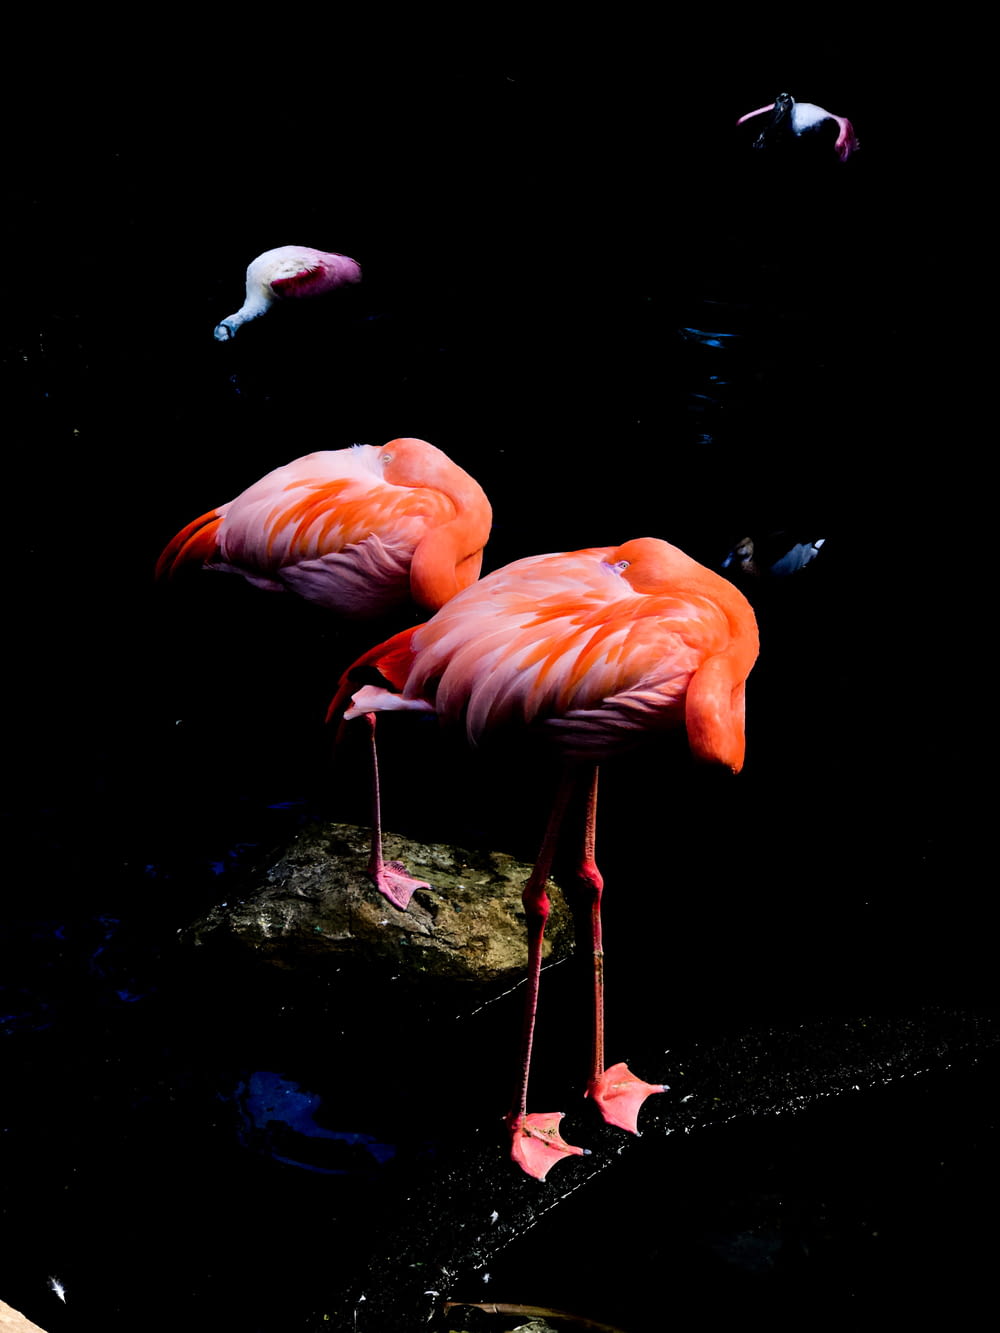 low-light photo of two orange flamingos